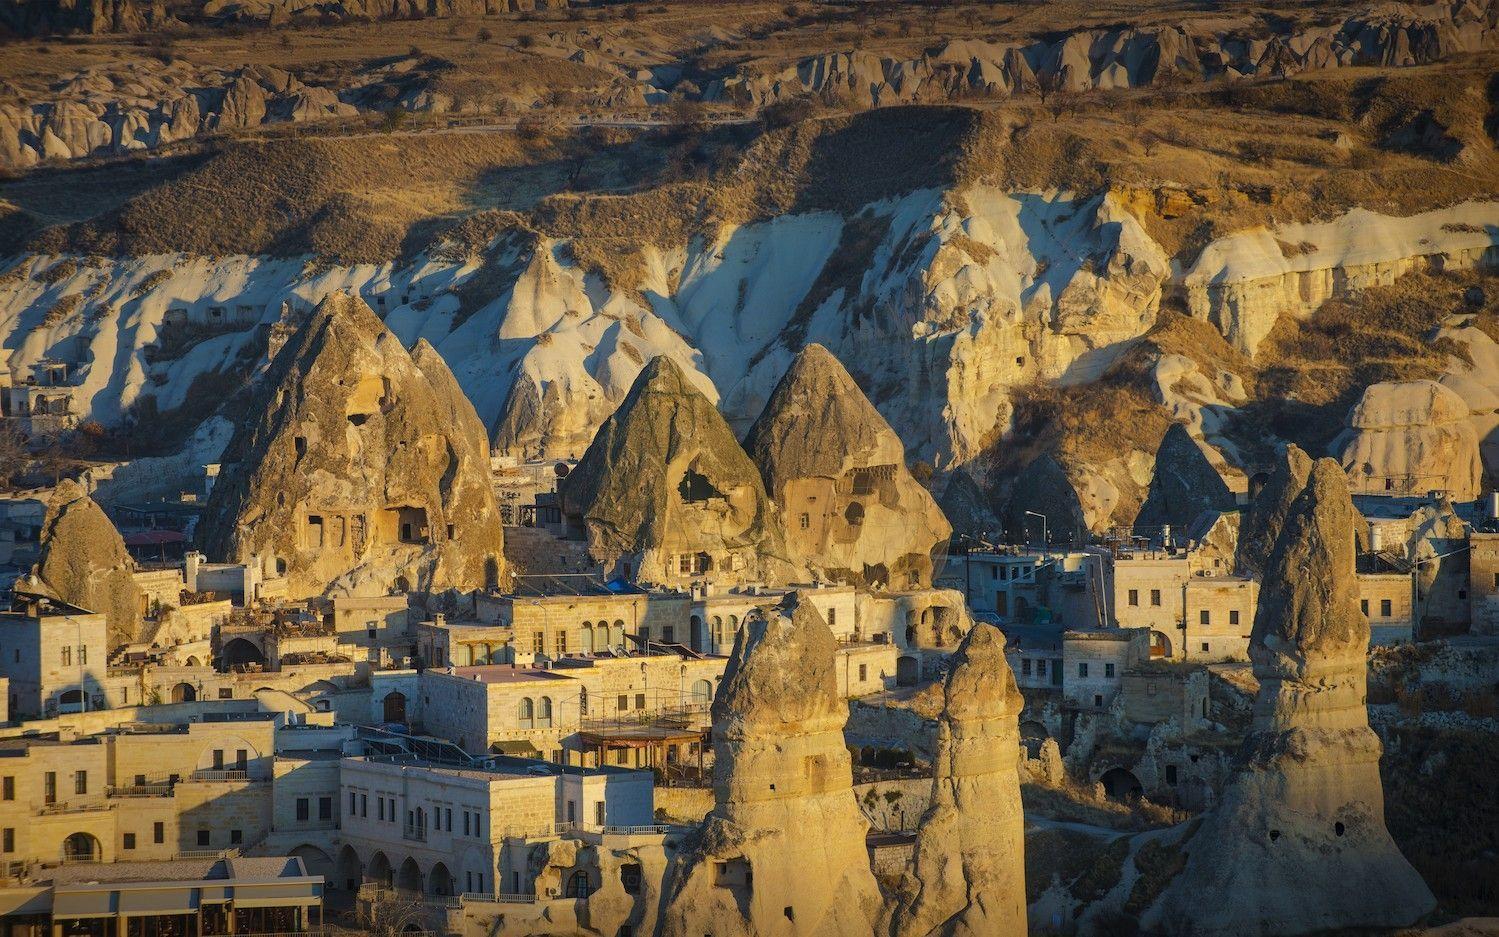 Göreme National Park and the Rock Sites of Cappadocia. Simply